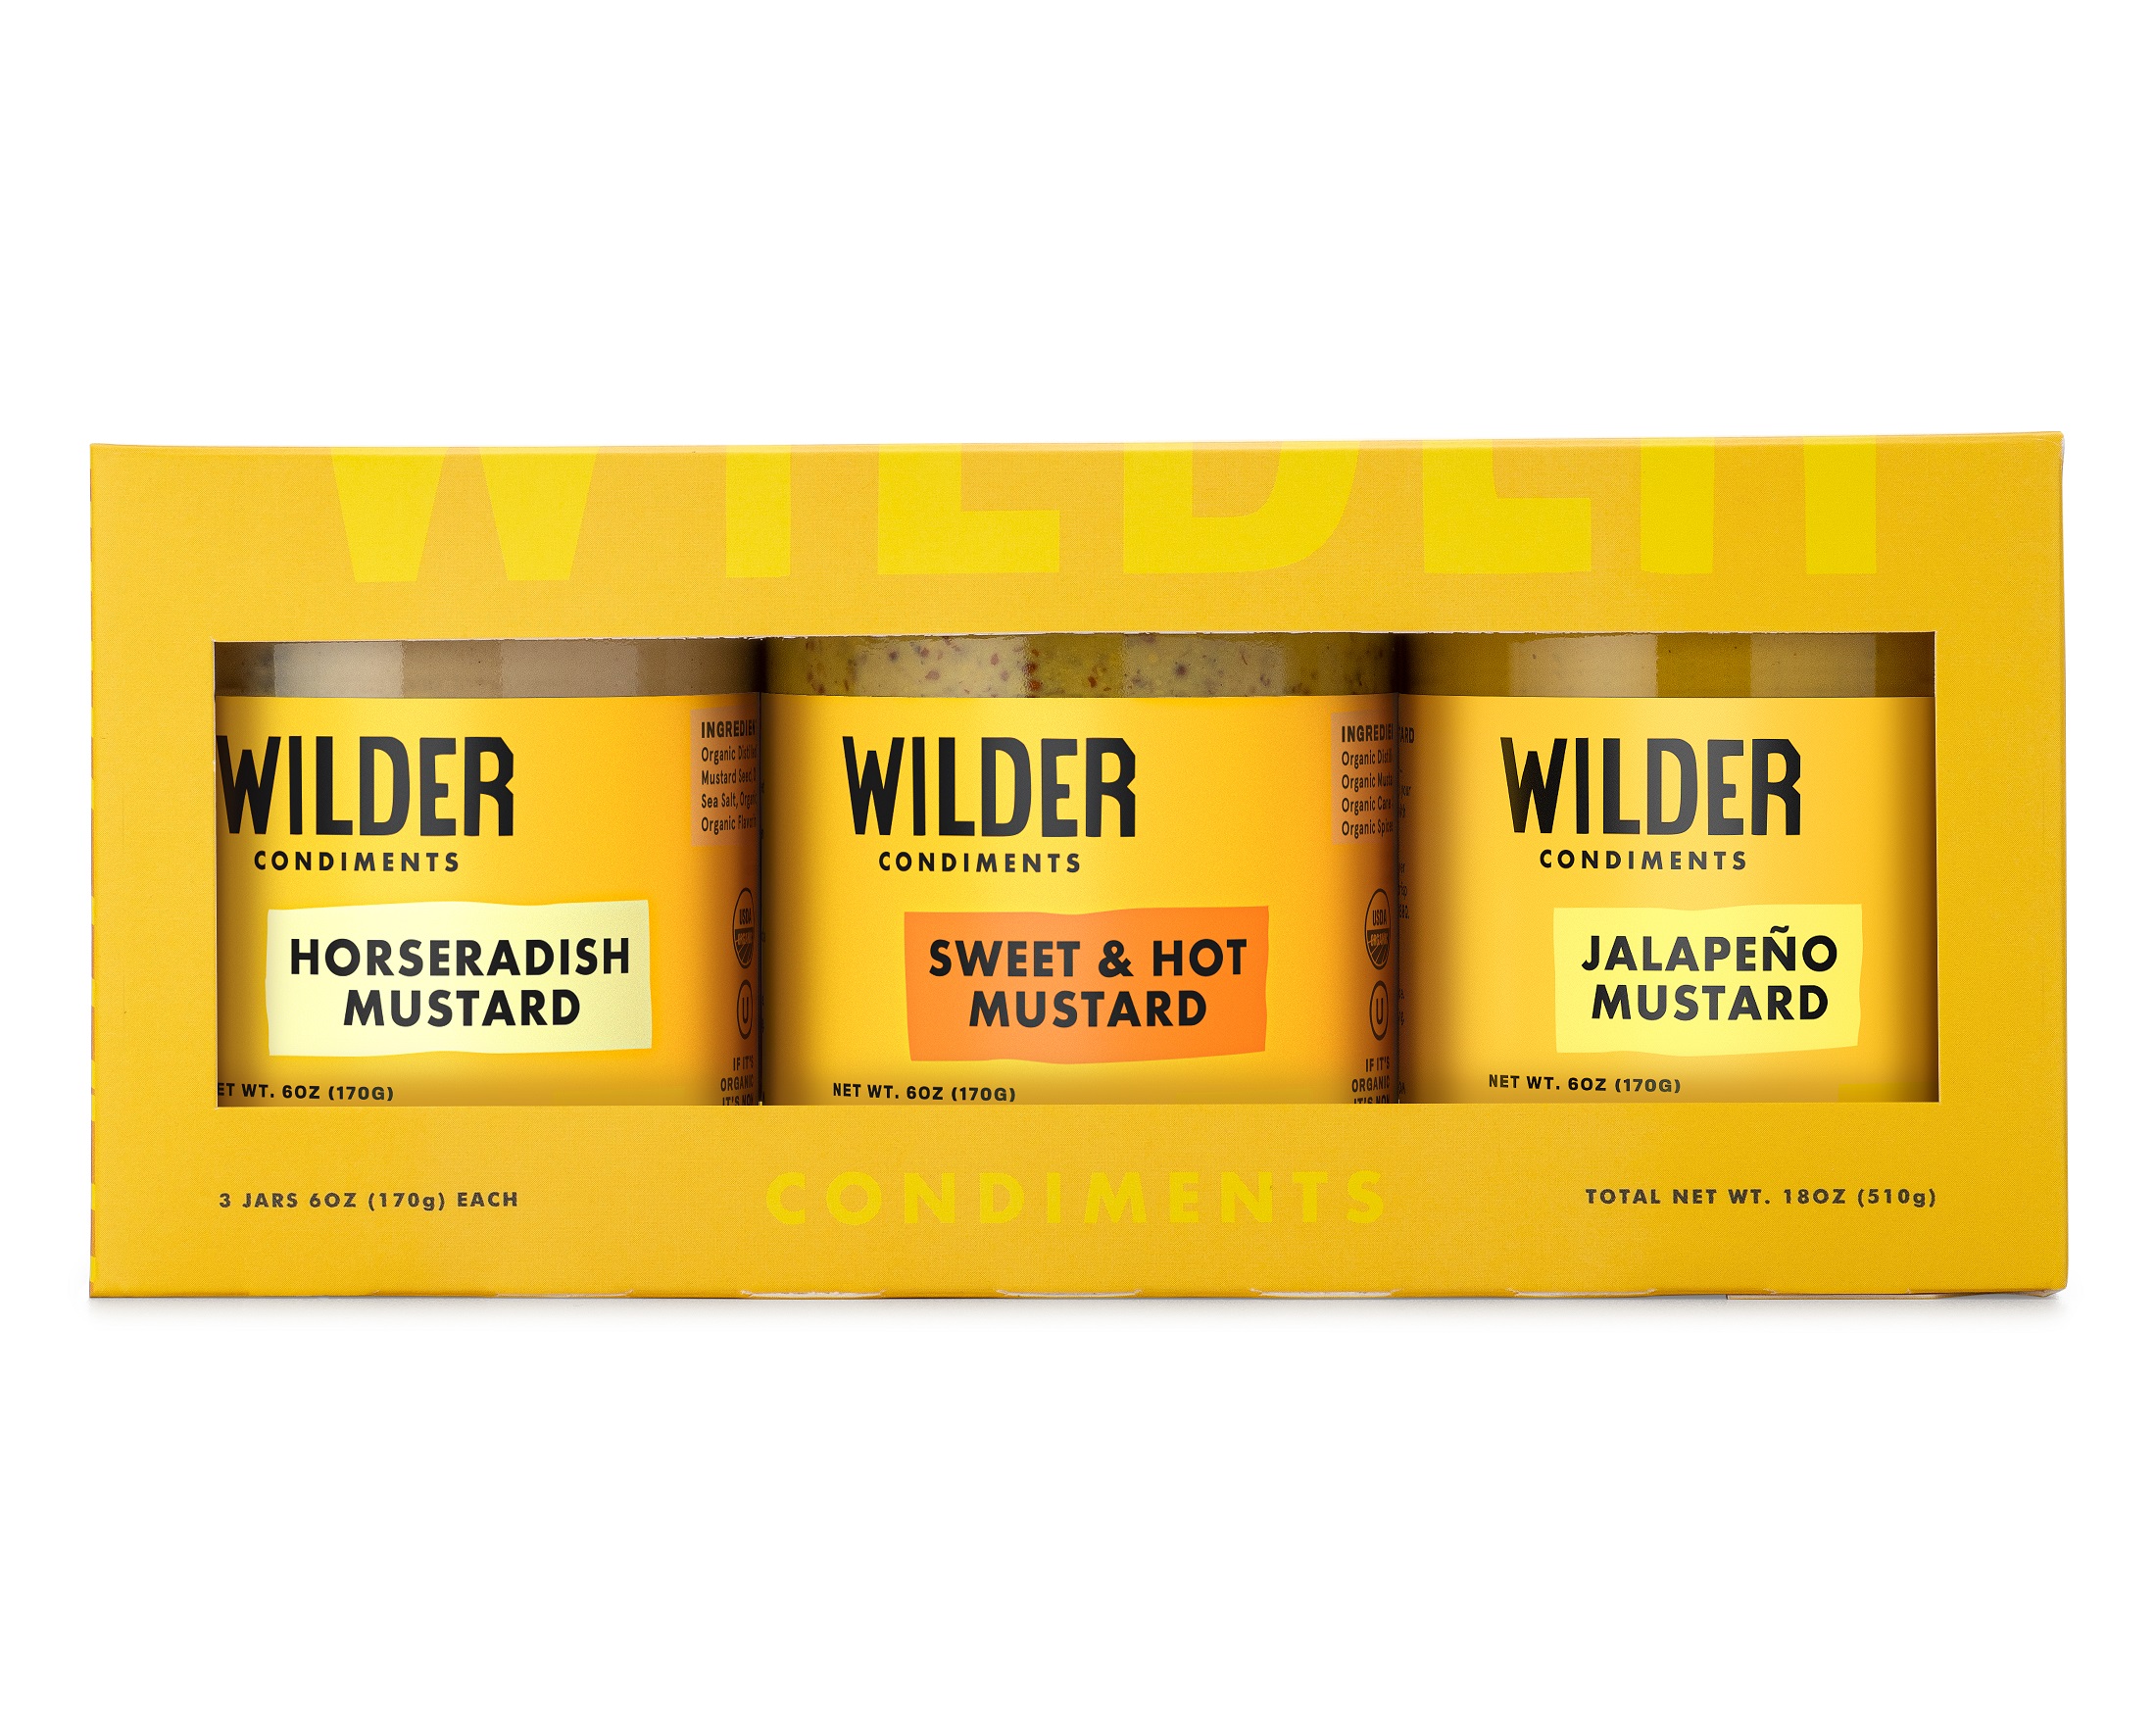 The Wilder flavor trio gift pack: Horseradish Mustard, Sweet & Hot Mustard and Jalapeño Mustard.